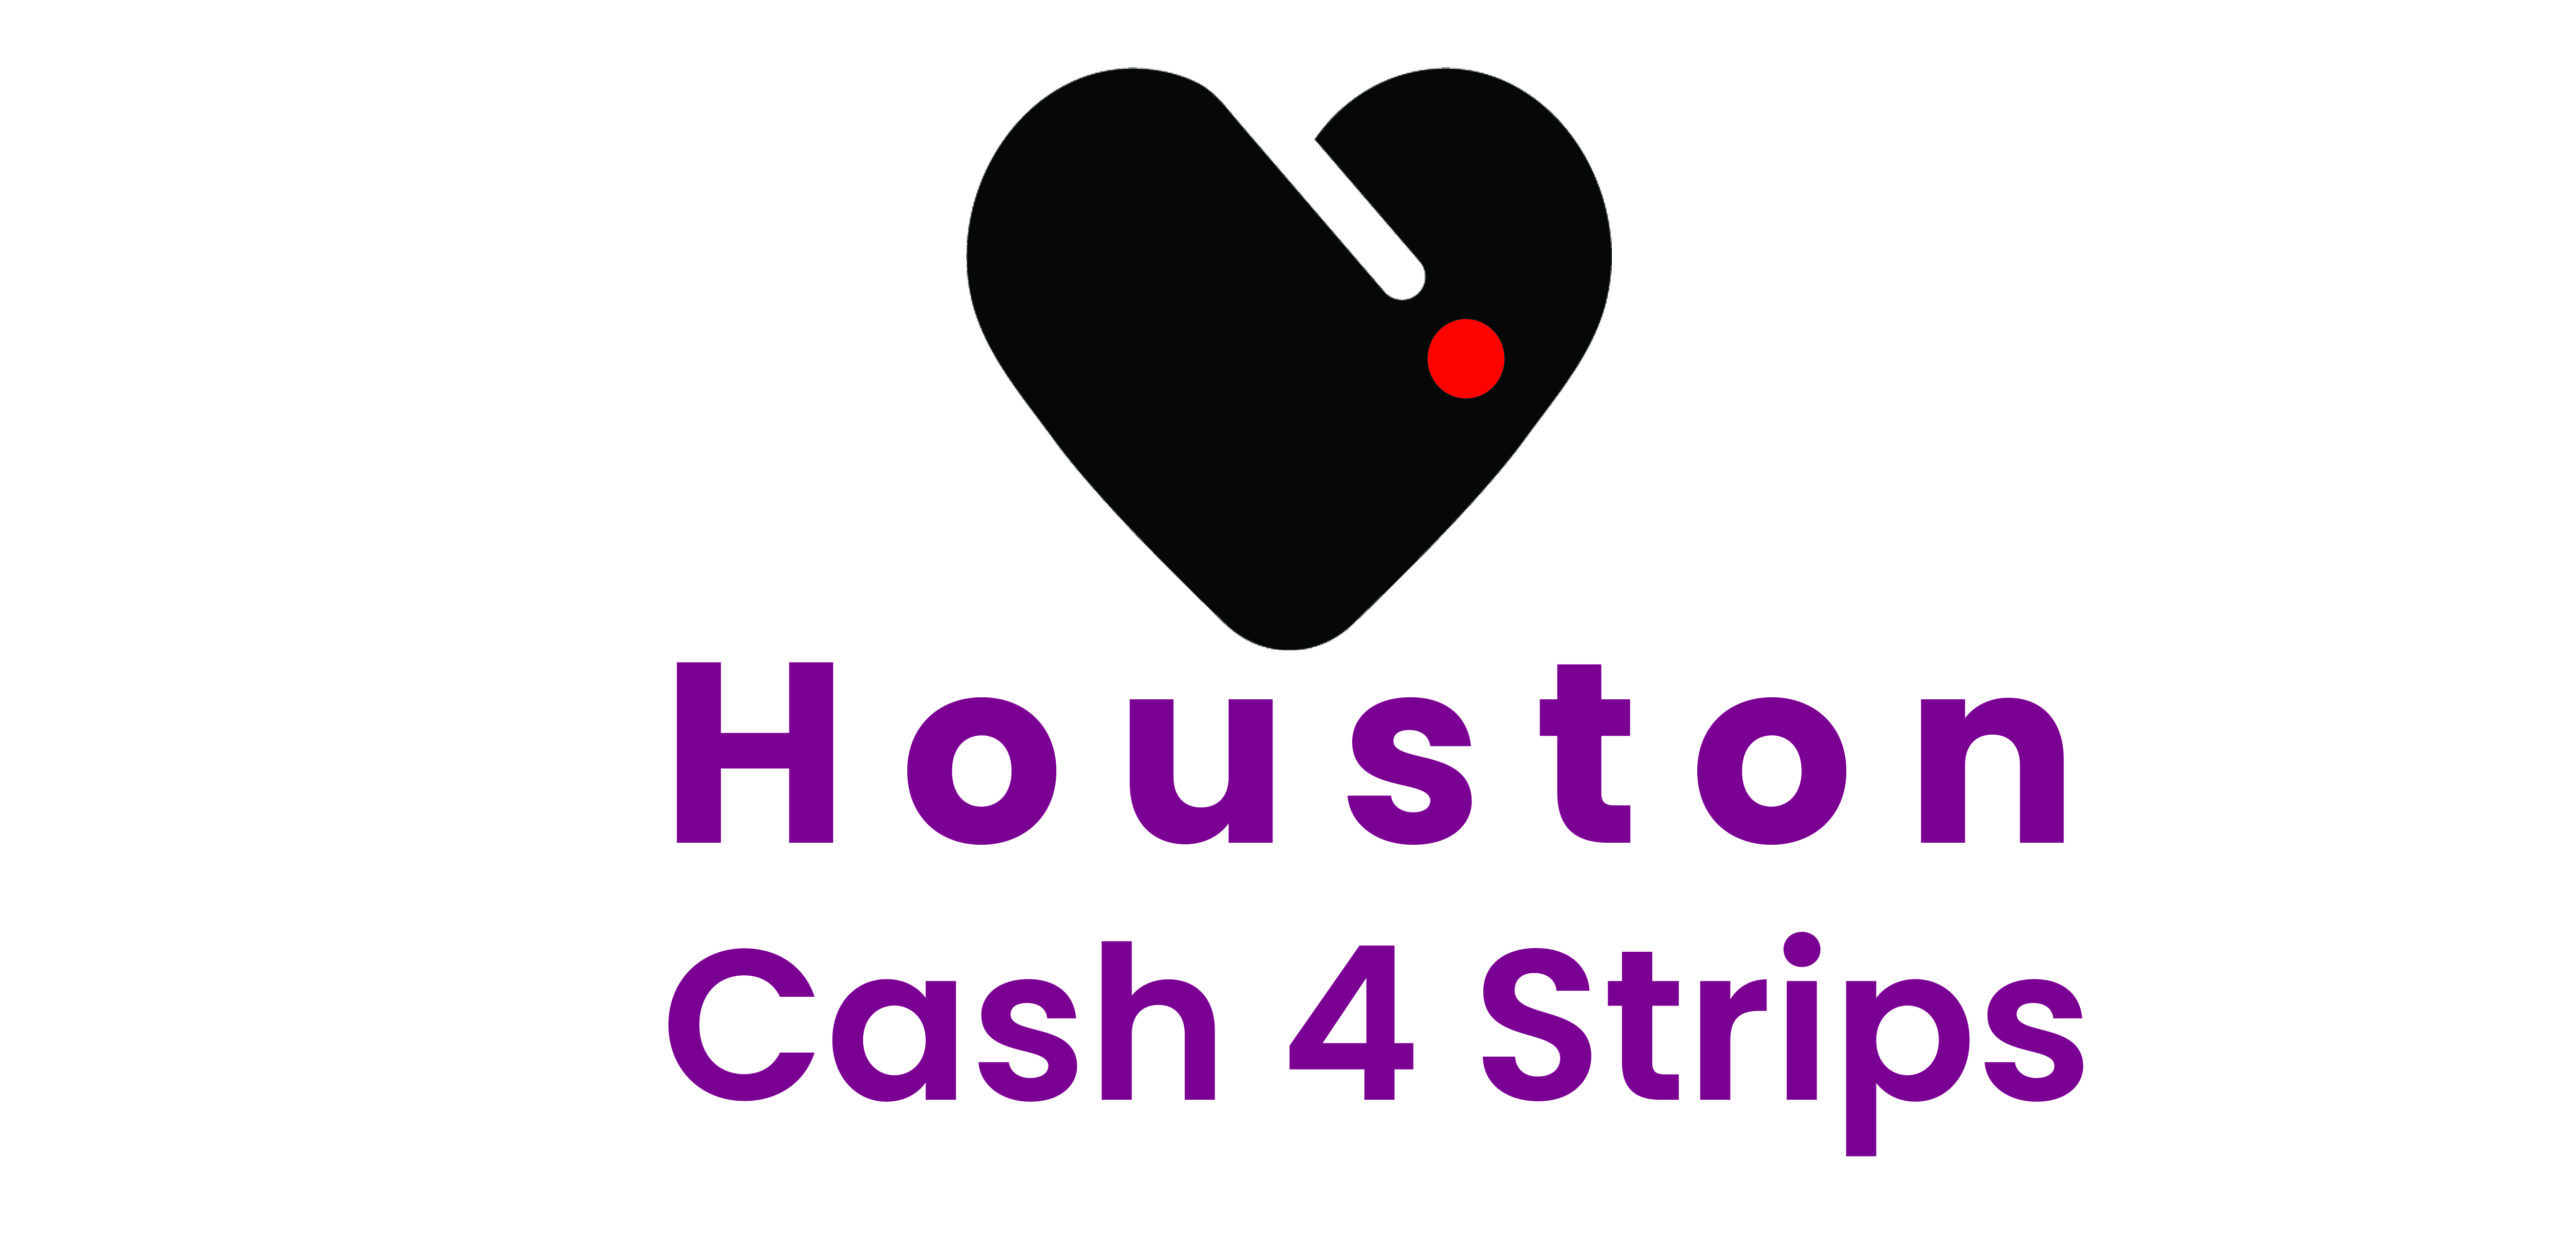 Houston Cash 4 Strips